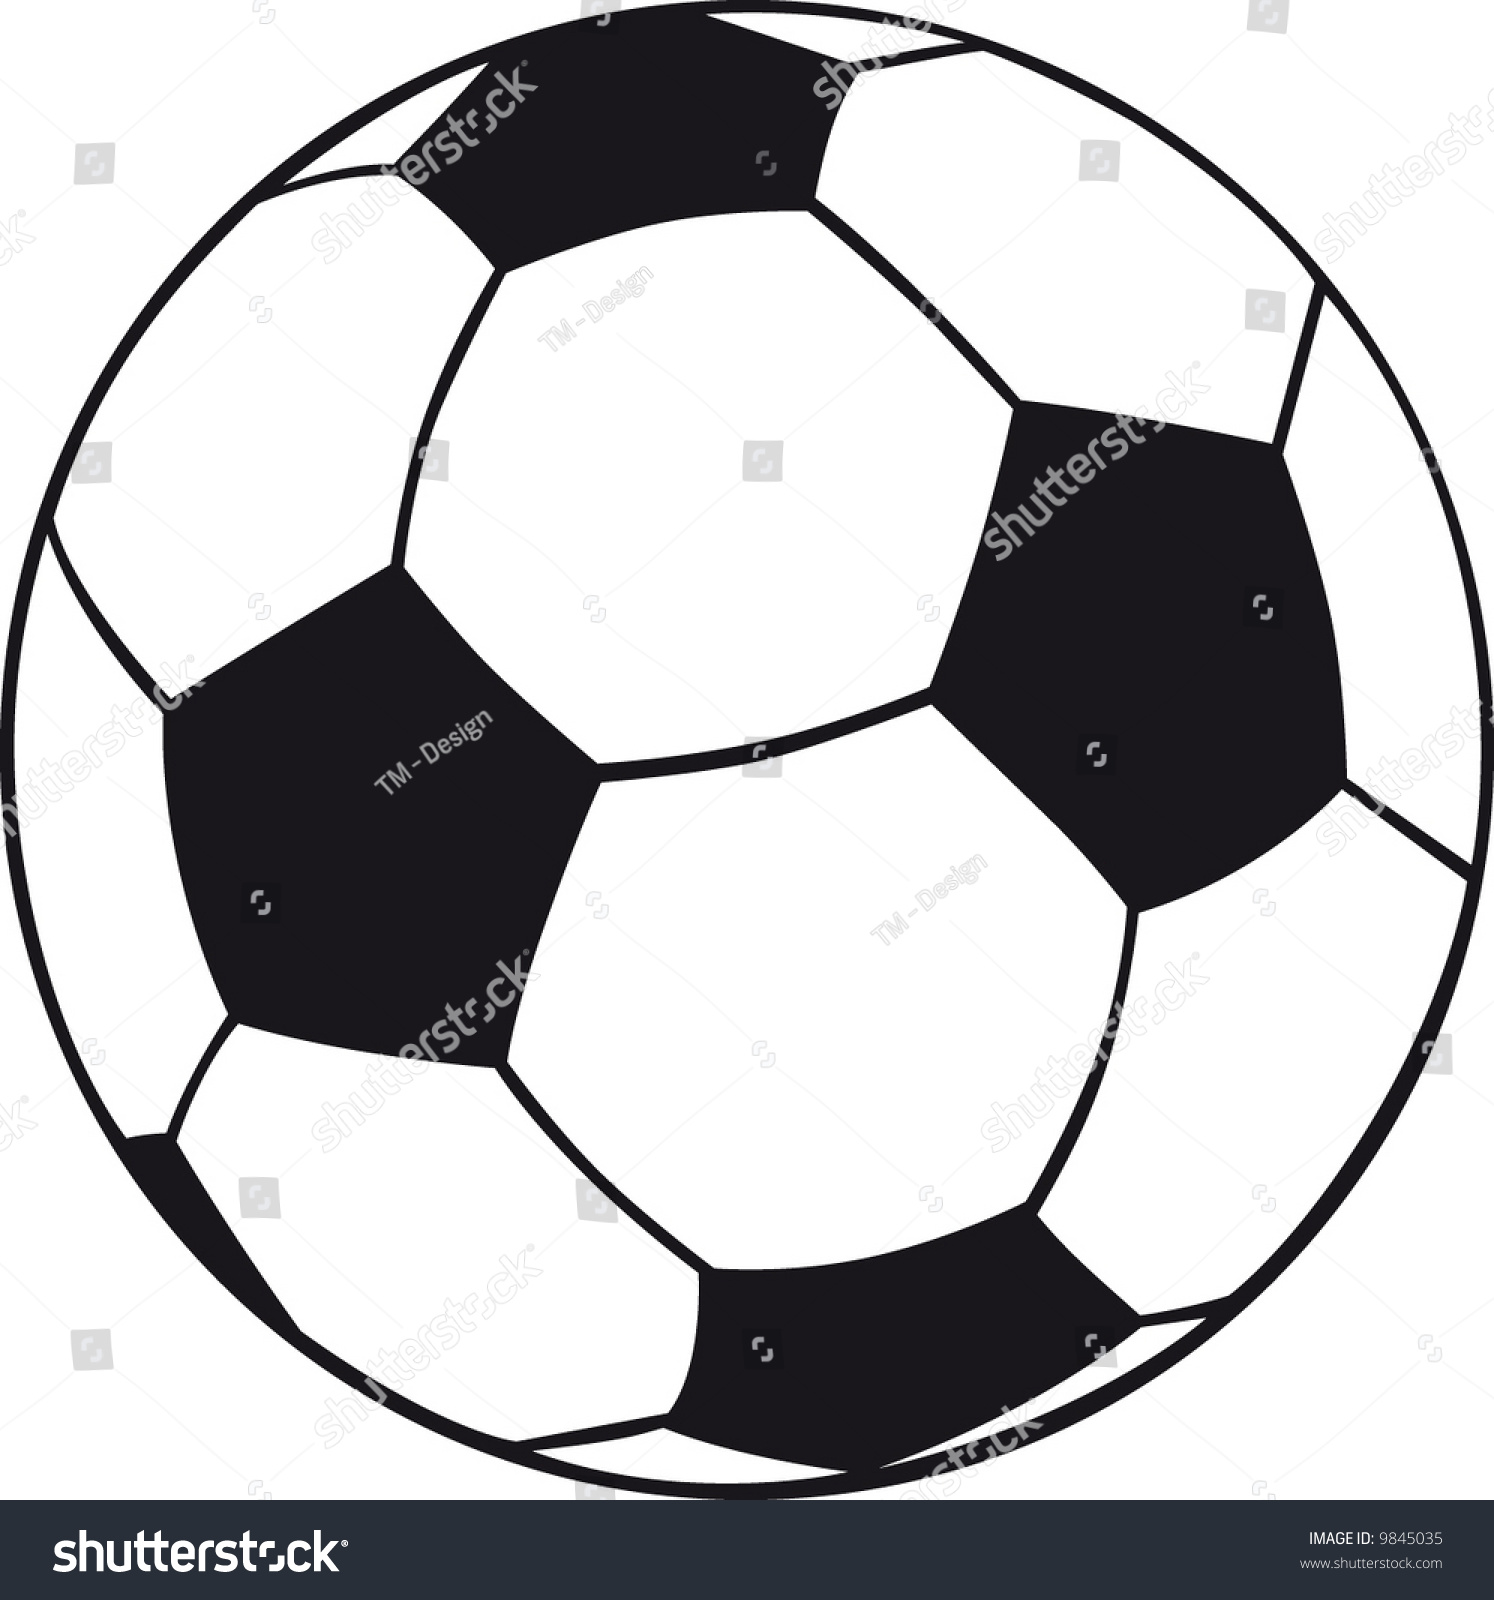 Vector Football - 9845035 : Shutterstock